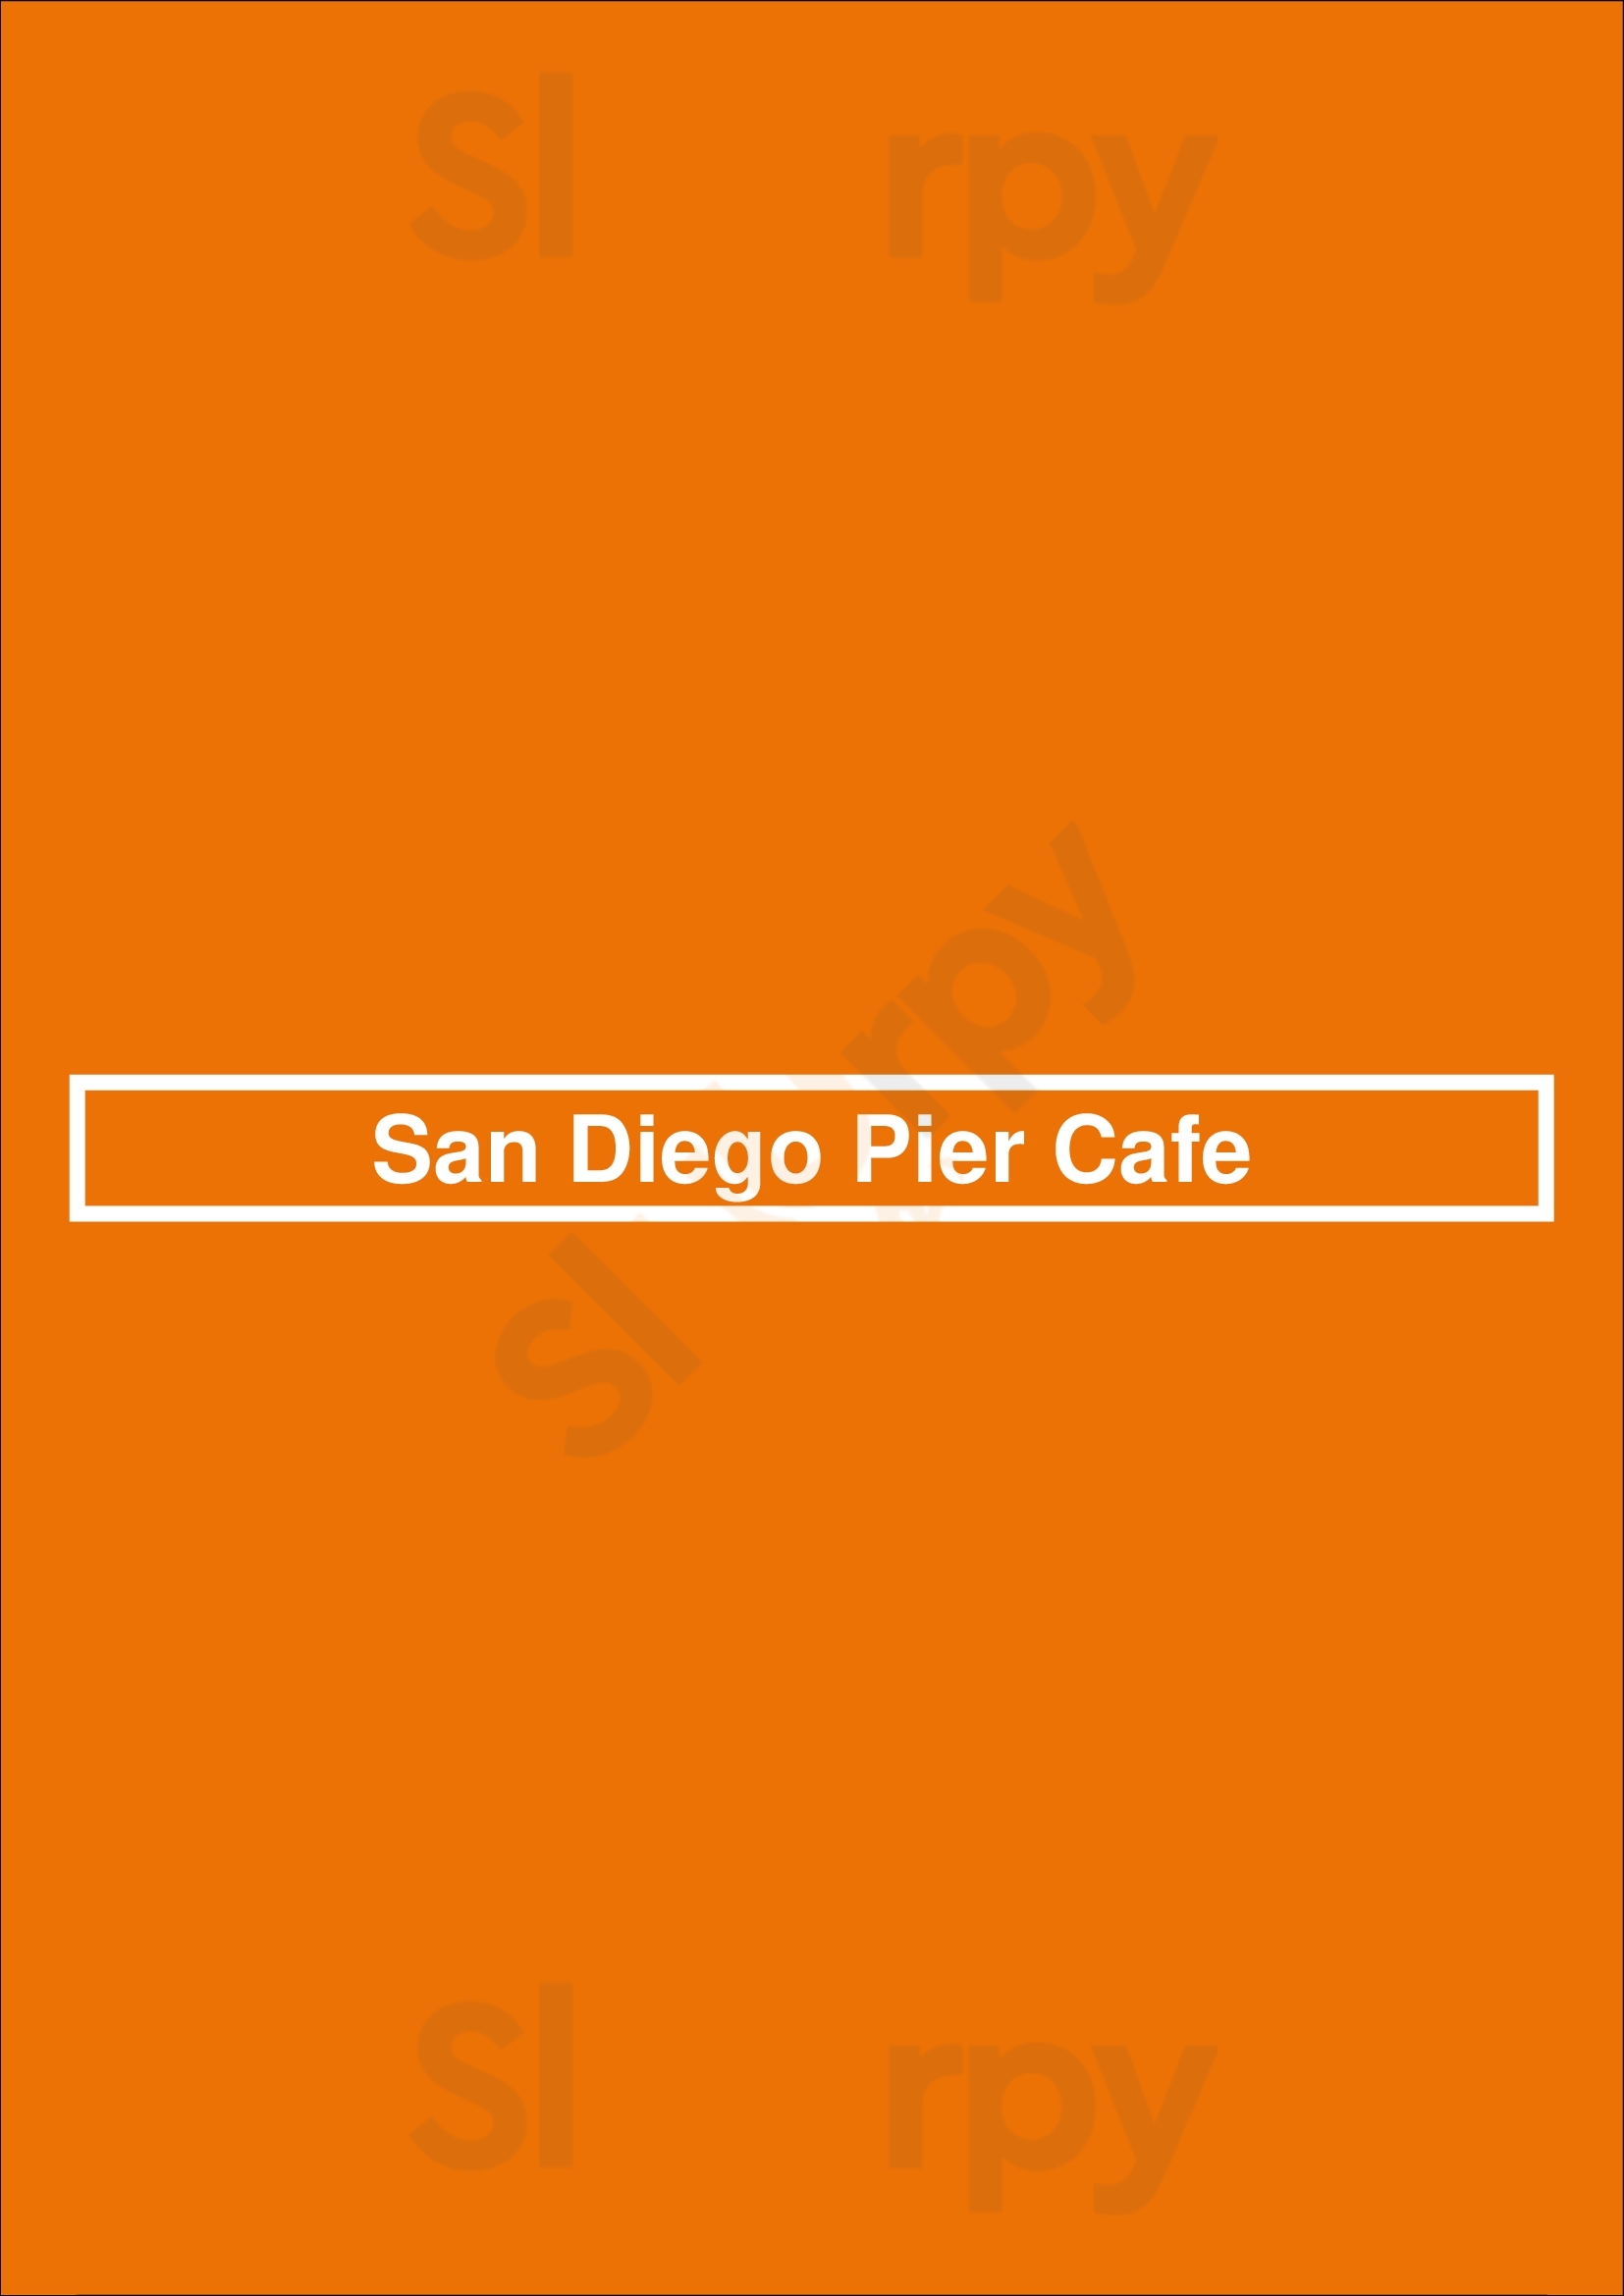 San Diego Pier Cafe San Diego Menu - 1